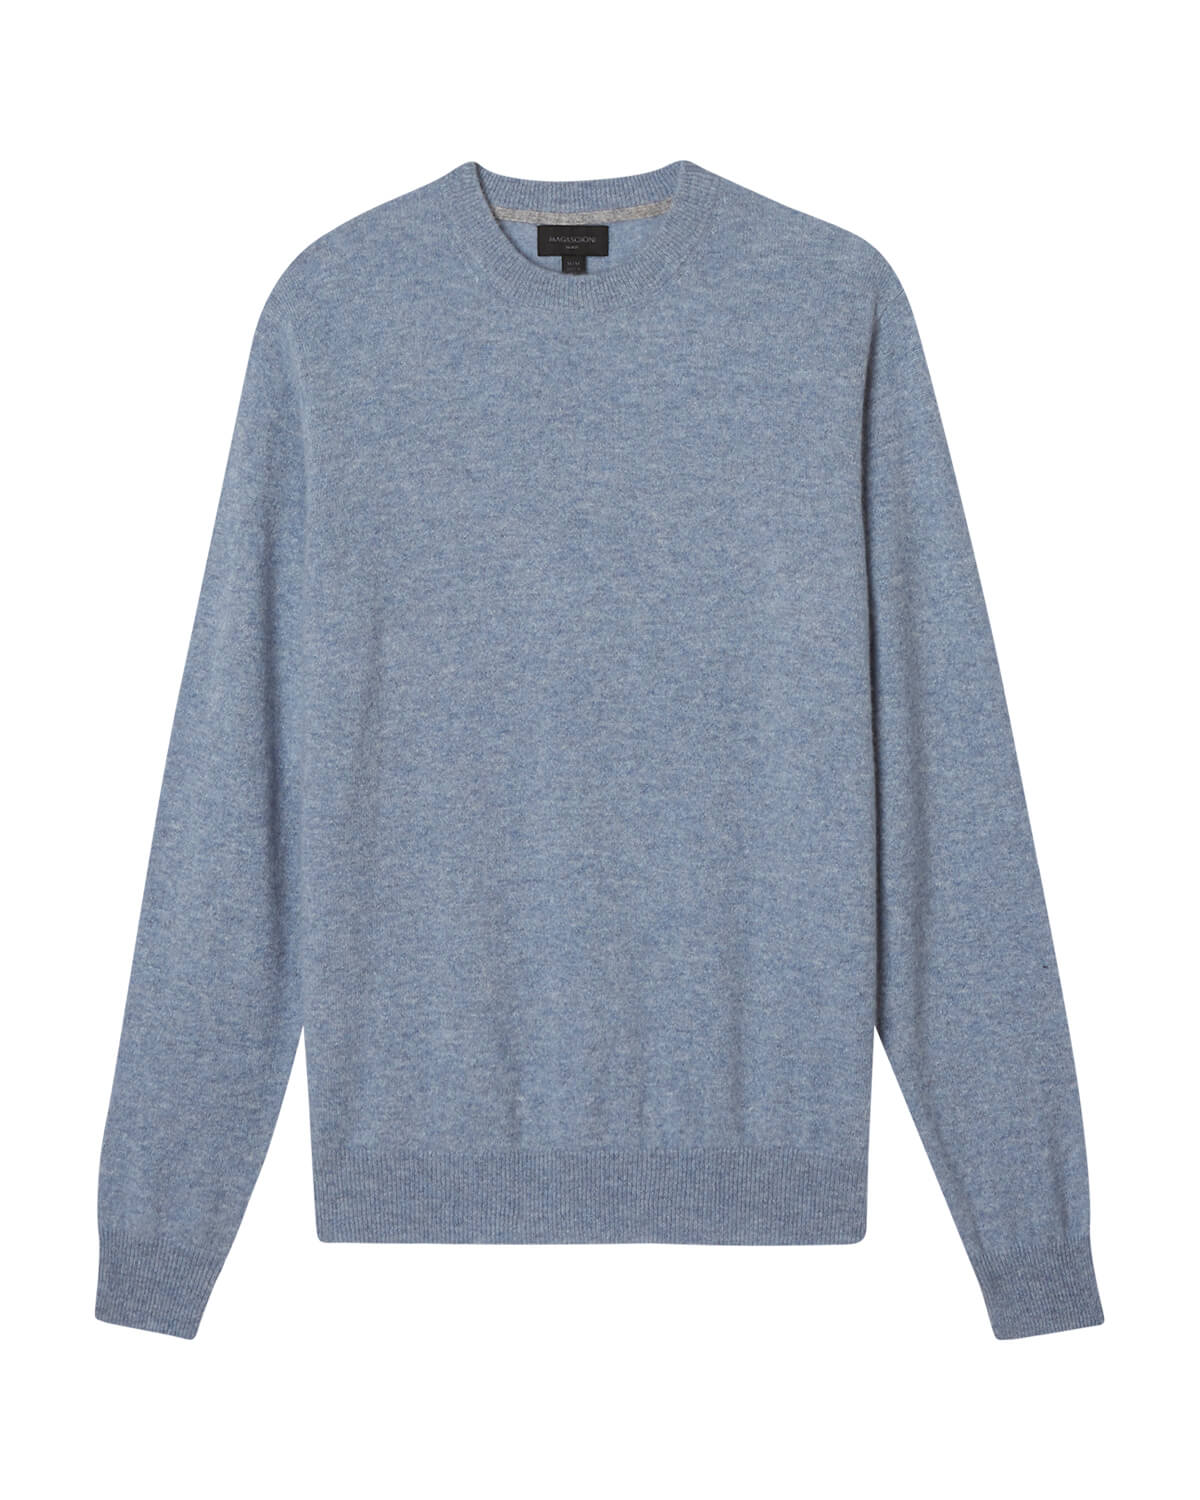 Shop Men's Cashmere Rib Trim Crew Neck Sweater | Magaschoni Men | JANE + MERCER